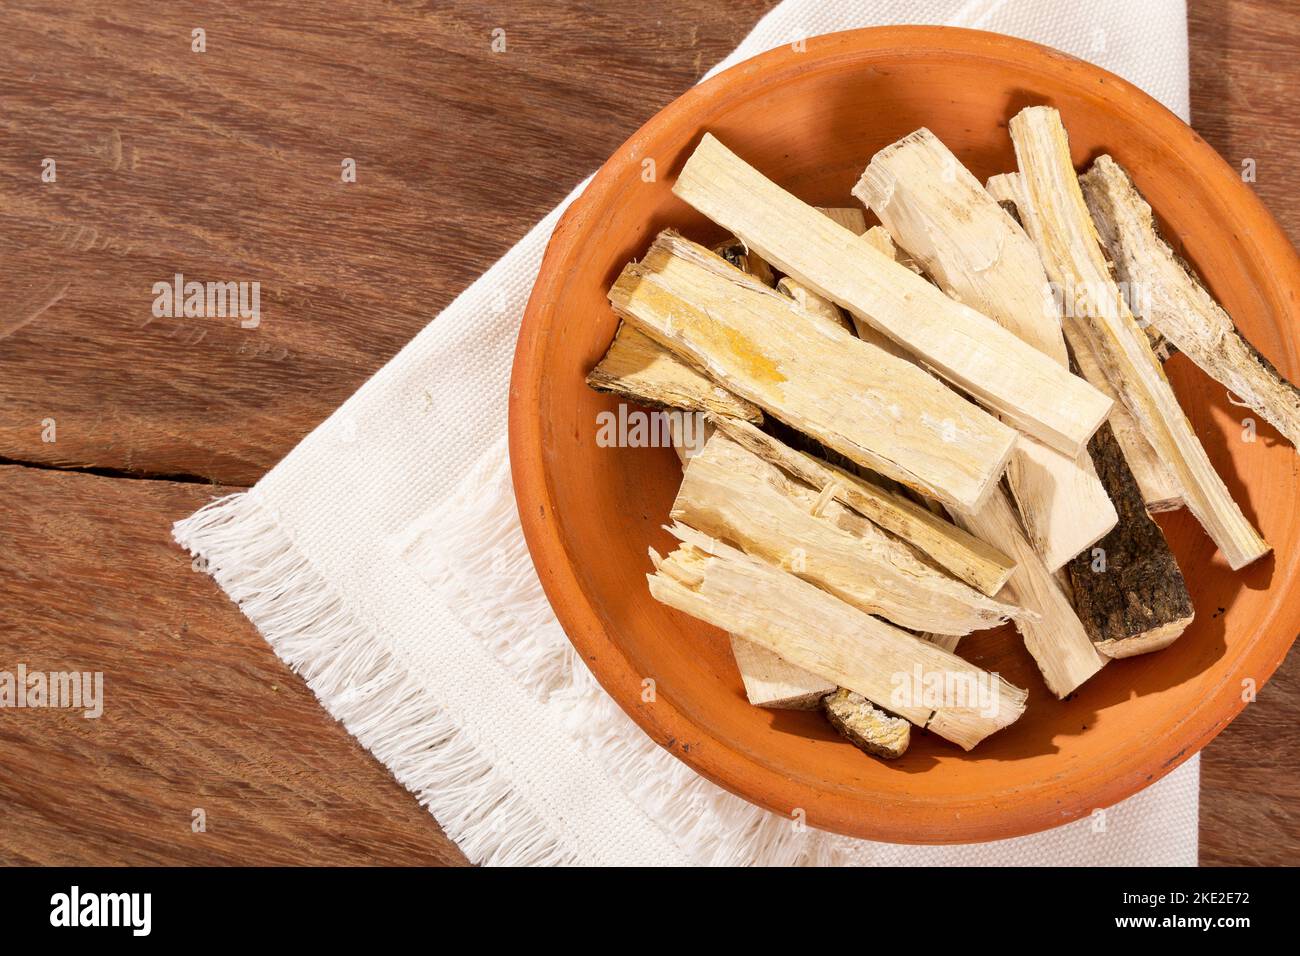 Quassia Amara - Stems Of Quassia Medicinal plant; On Wood Background Stock Photo